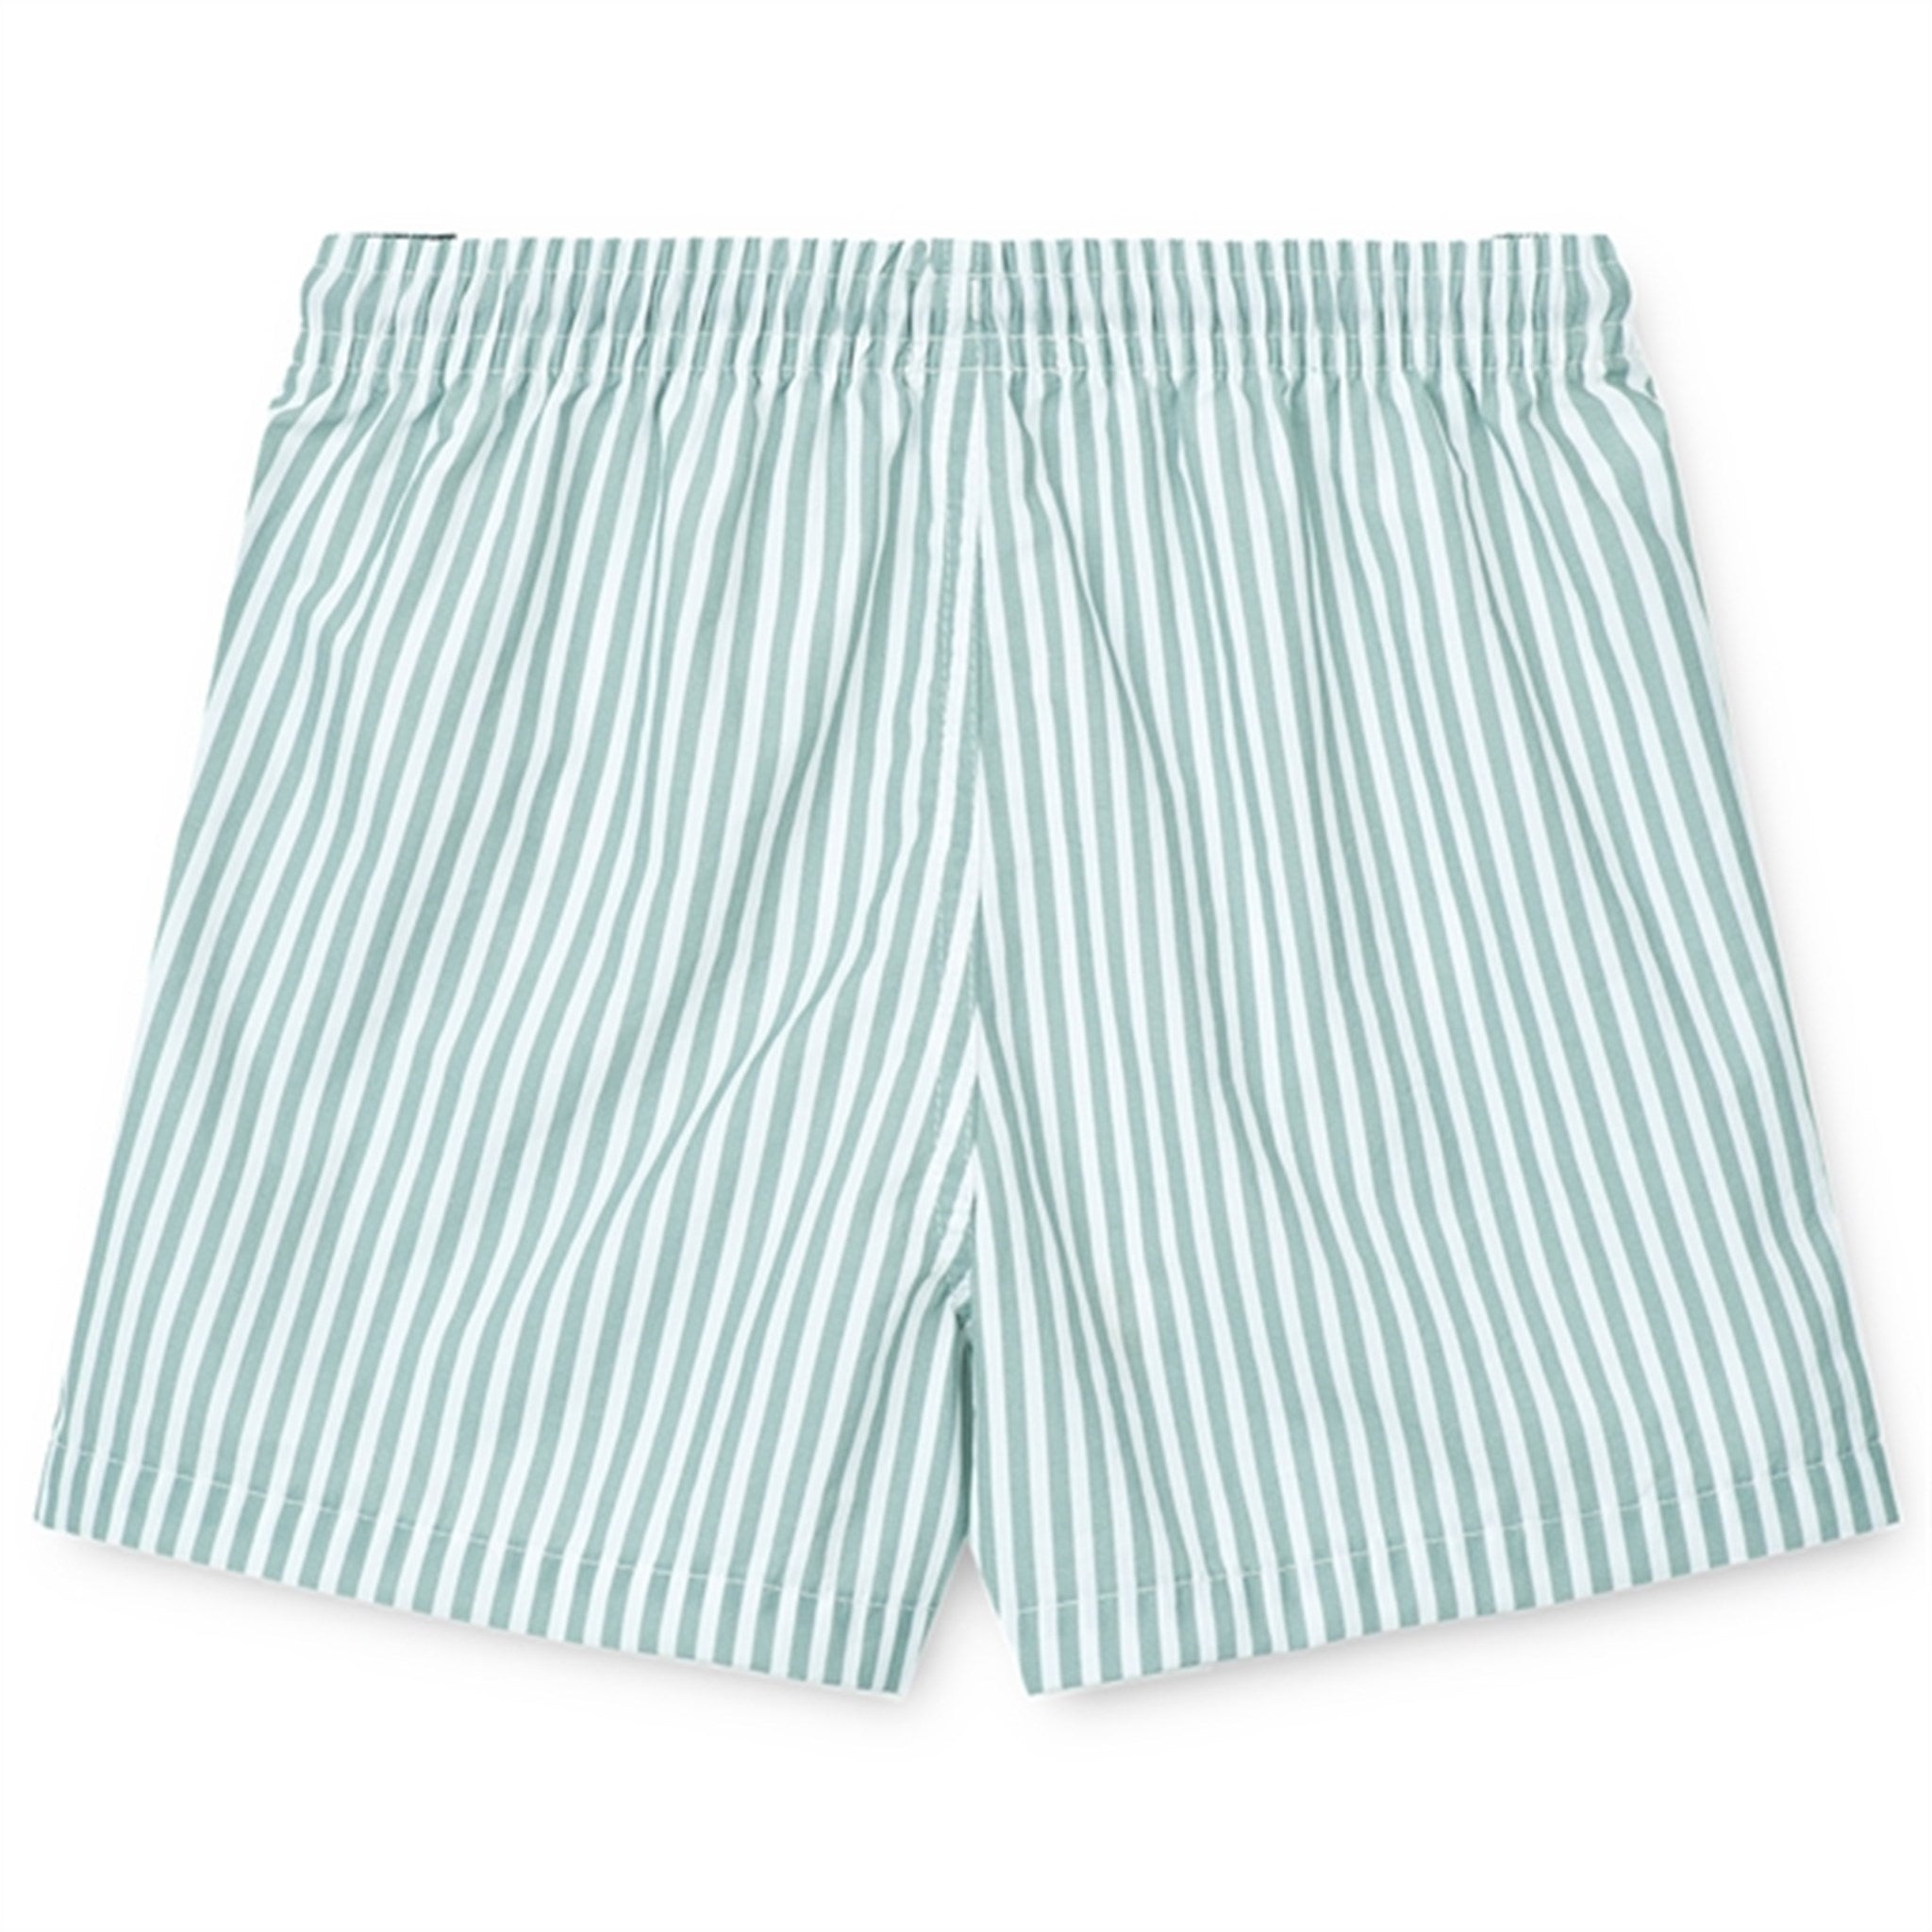 Liewood Duke Board Shorts Stripe Sea Blue/White 3